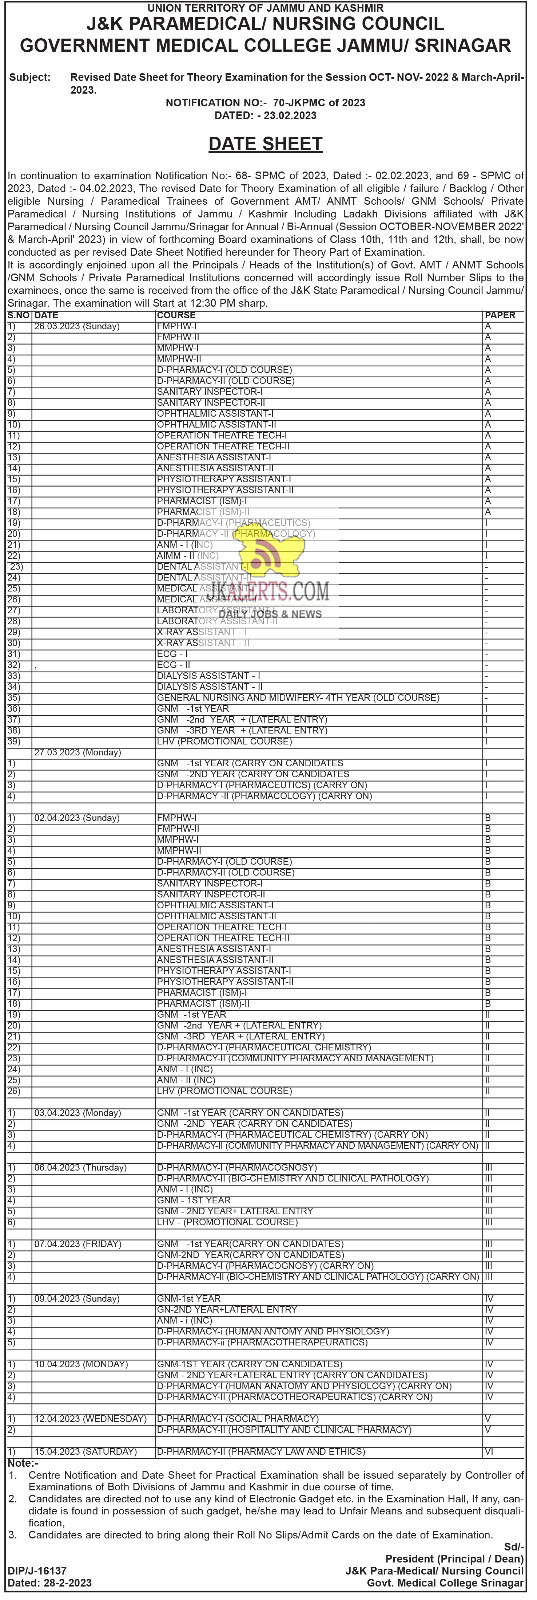 Revised Date Sheet JK Paramedical Nursing Council GMC